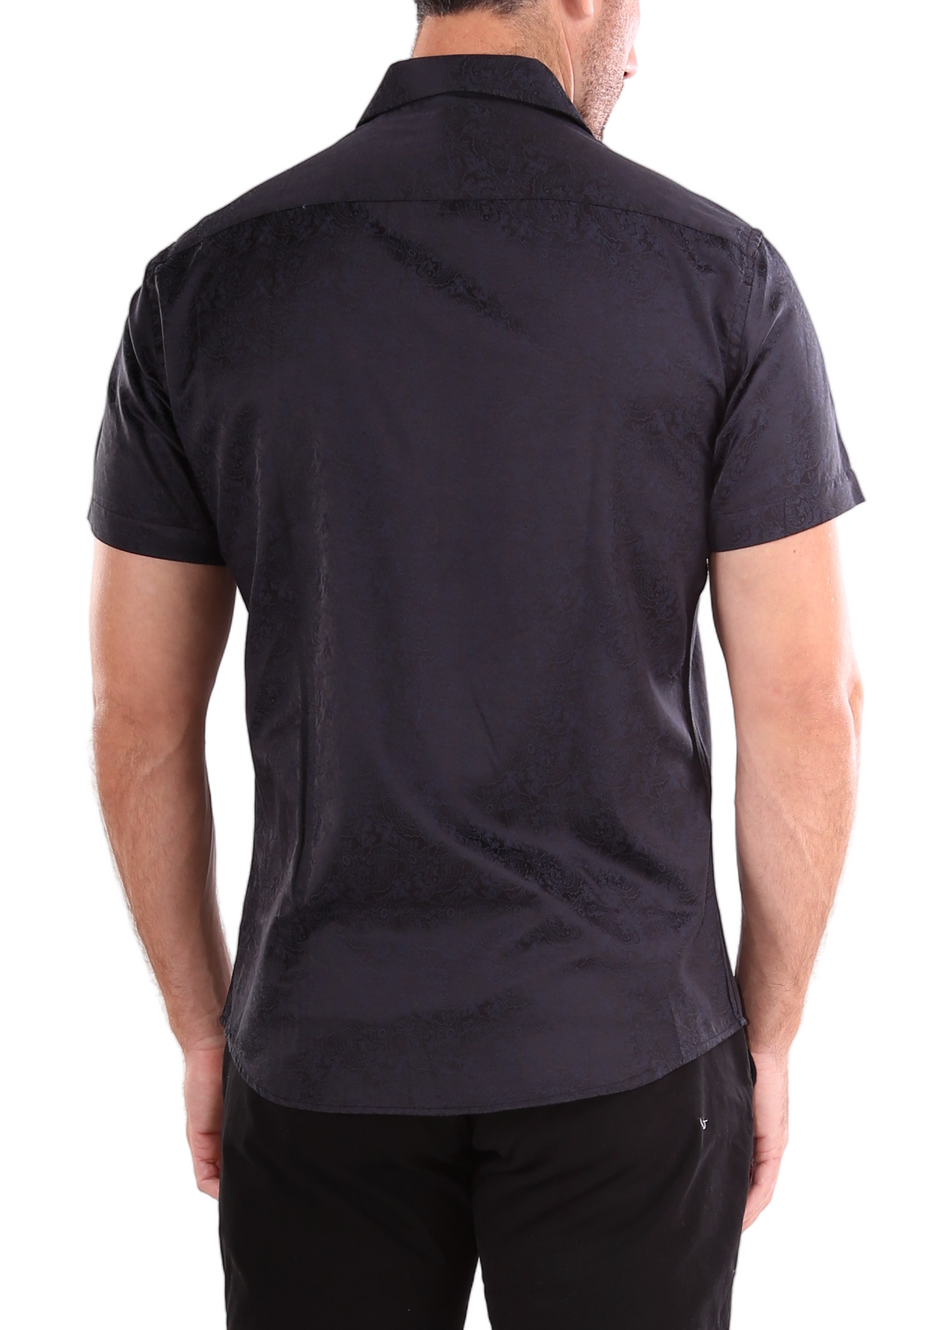 202144 - Men's Solid Black Paisley Texture Short Sleeve Dress Shirt